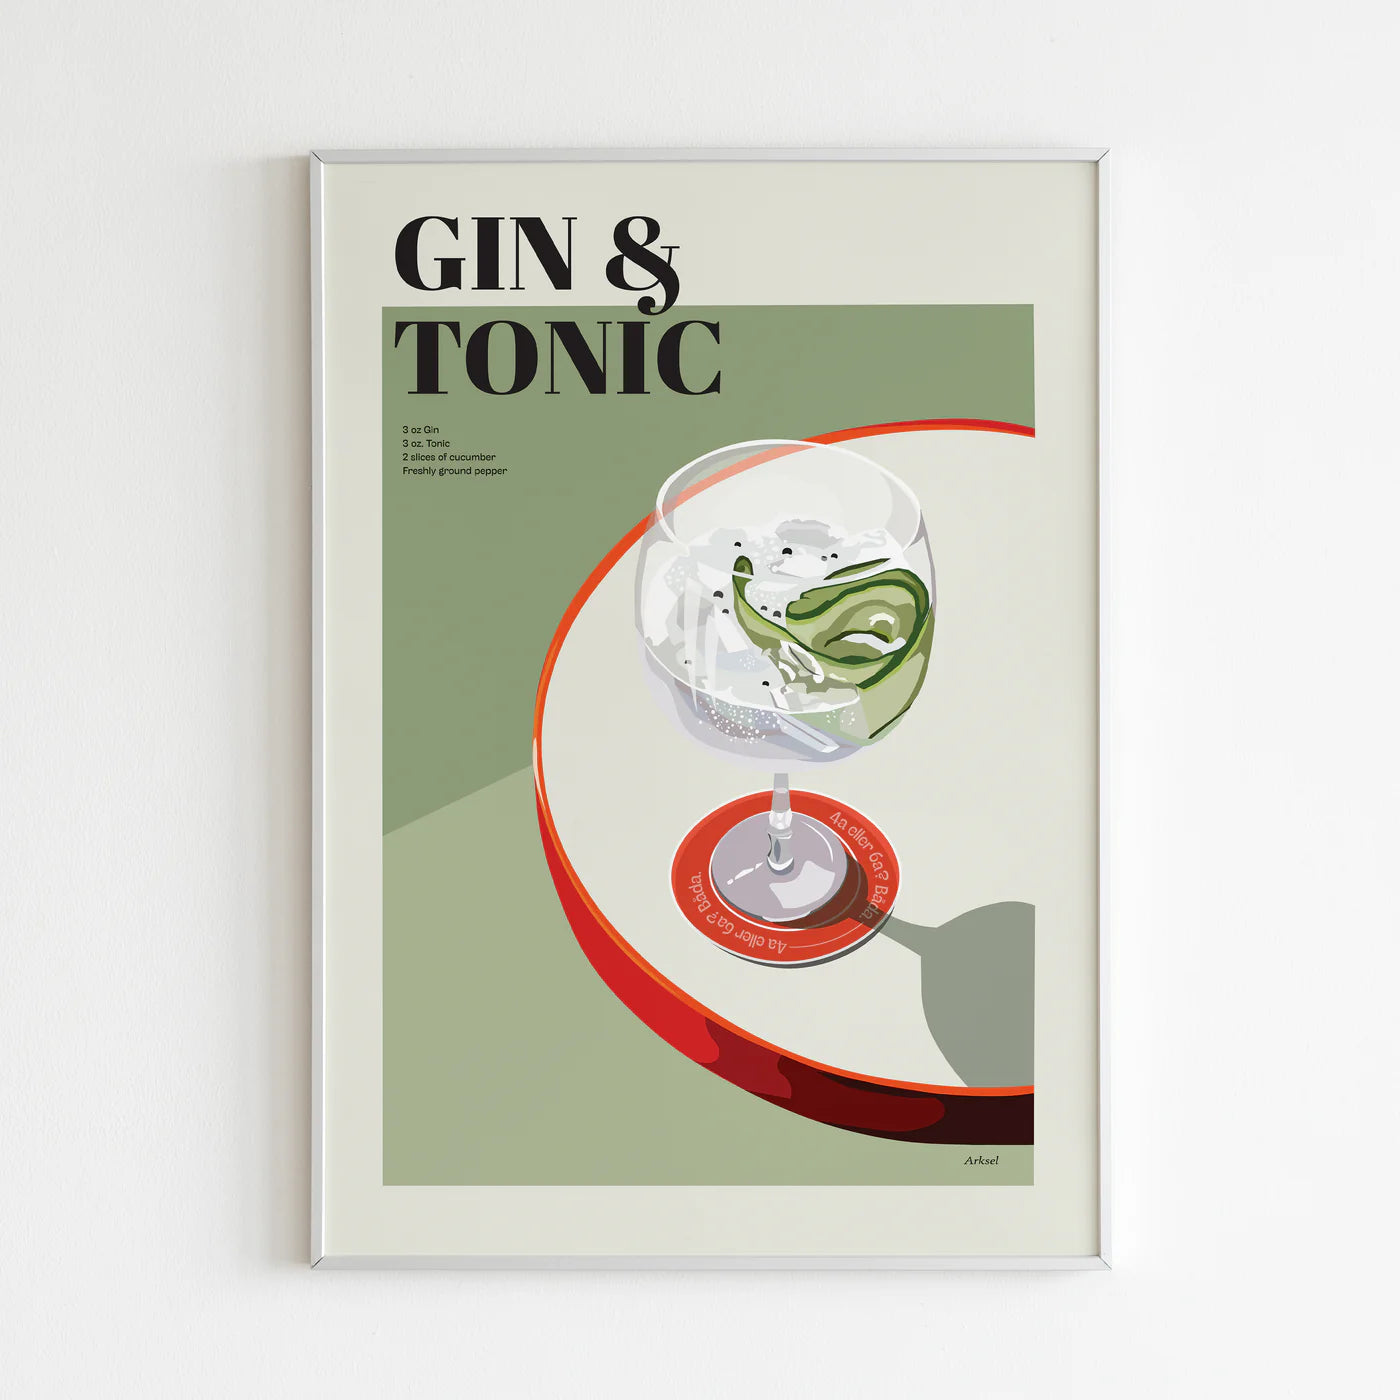 Gin & Tonic poster